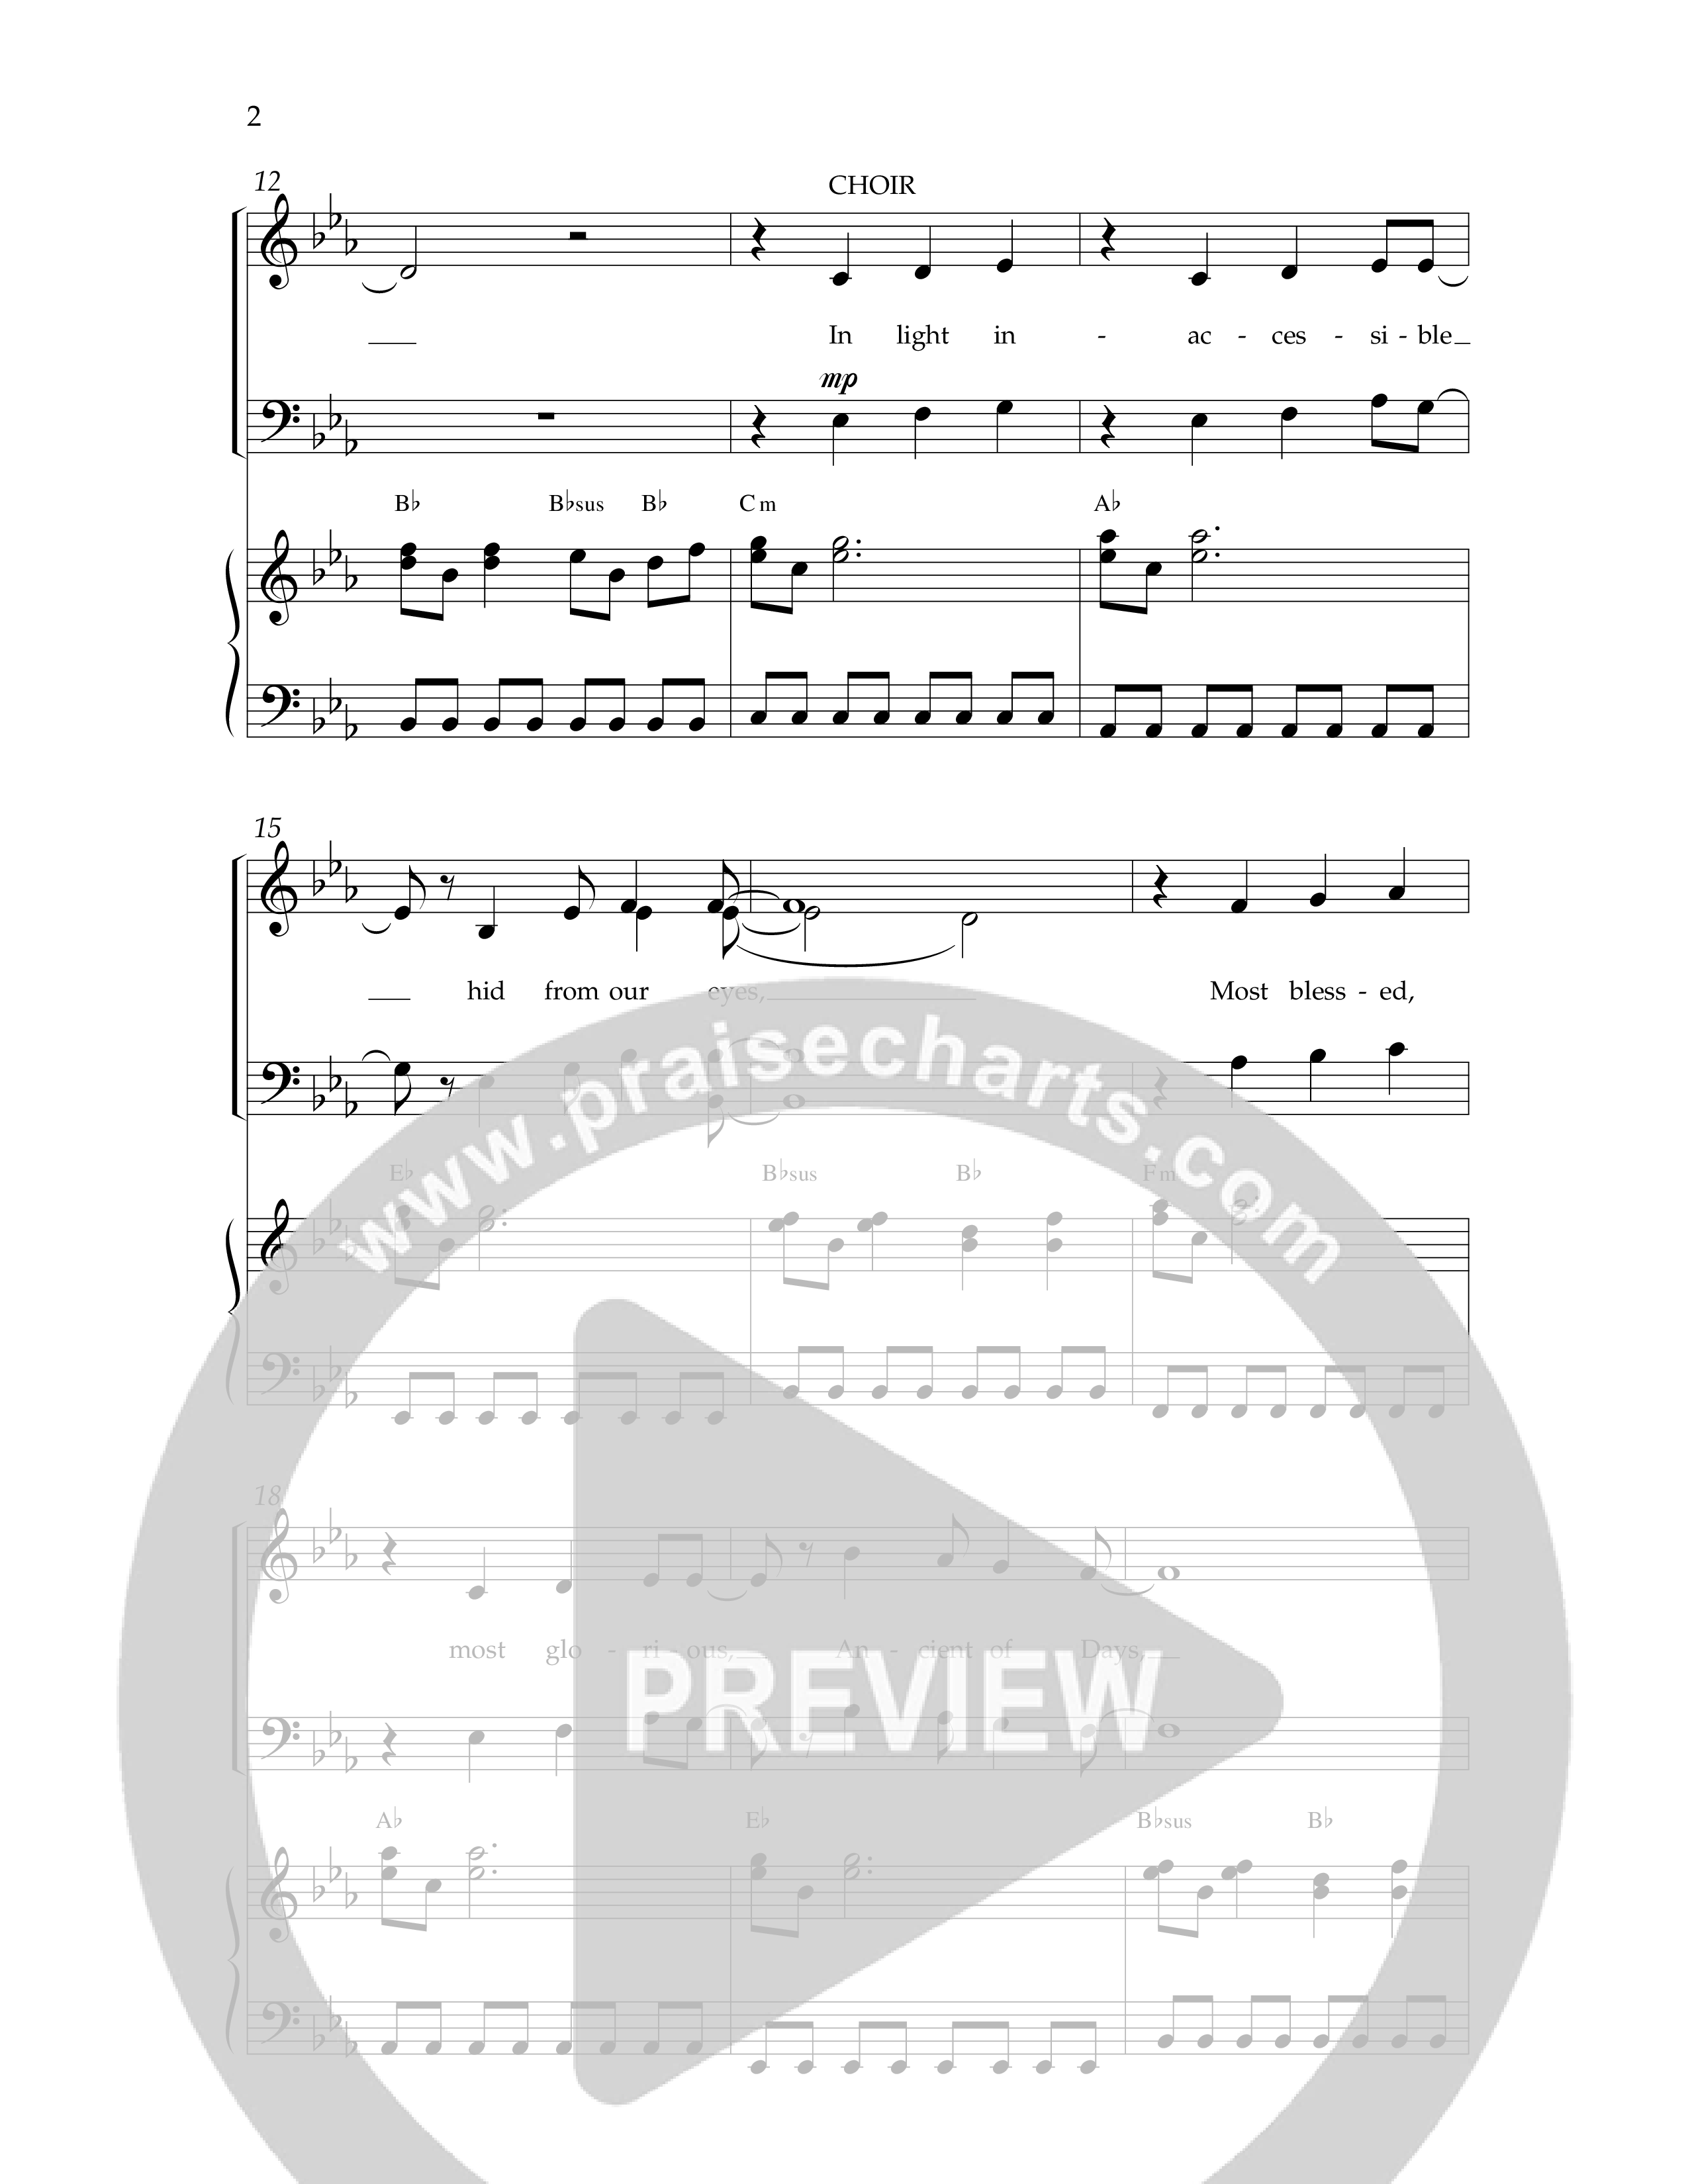 Immortal Invisible (Choral Anthem SATB) Anthem (SATB/Piano) (Lifeway Choral / Arr. Cliff Duren)